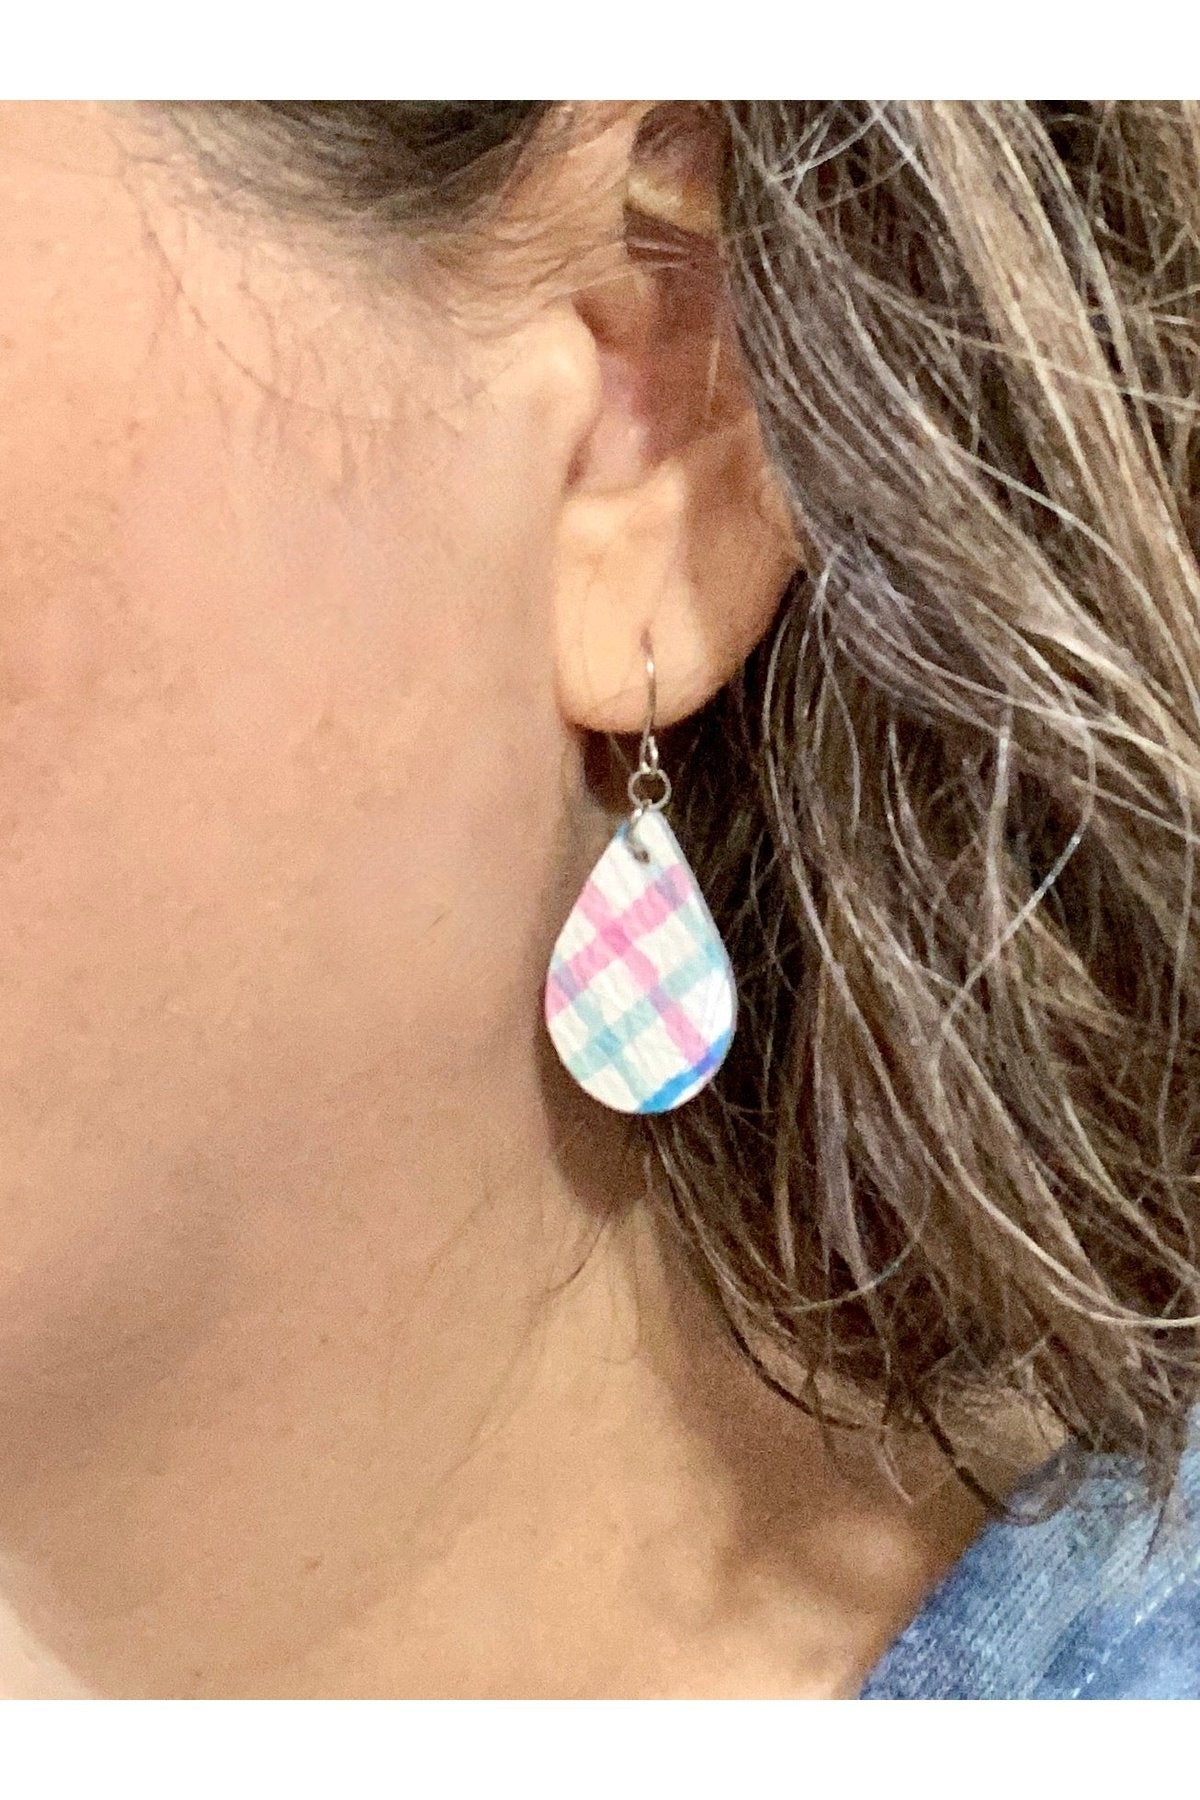 Small Teardrop Earrings in Spring Plaid